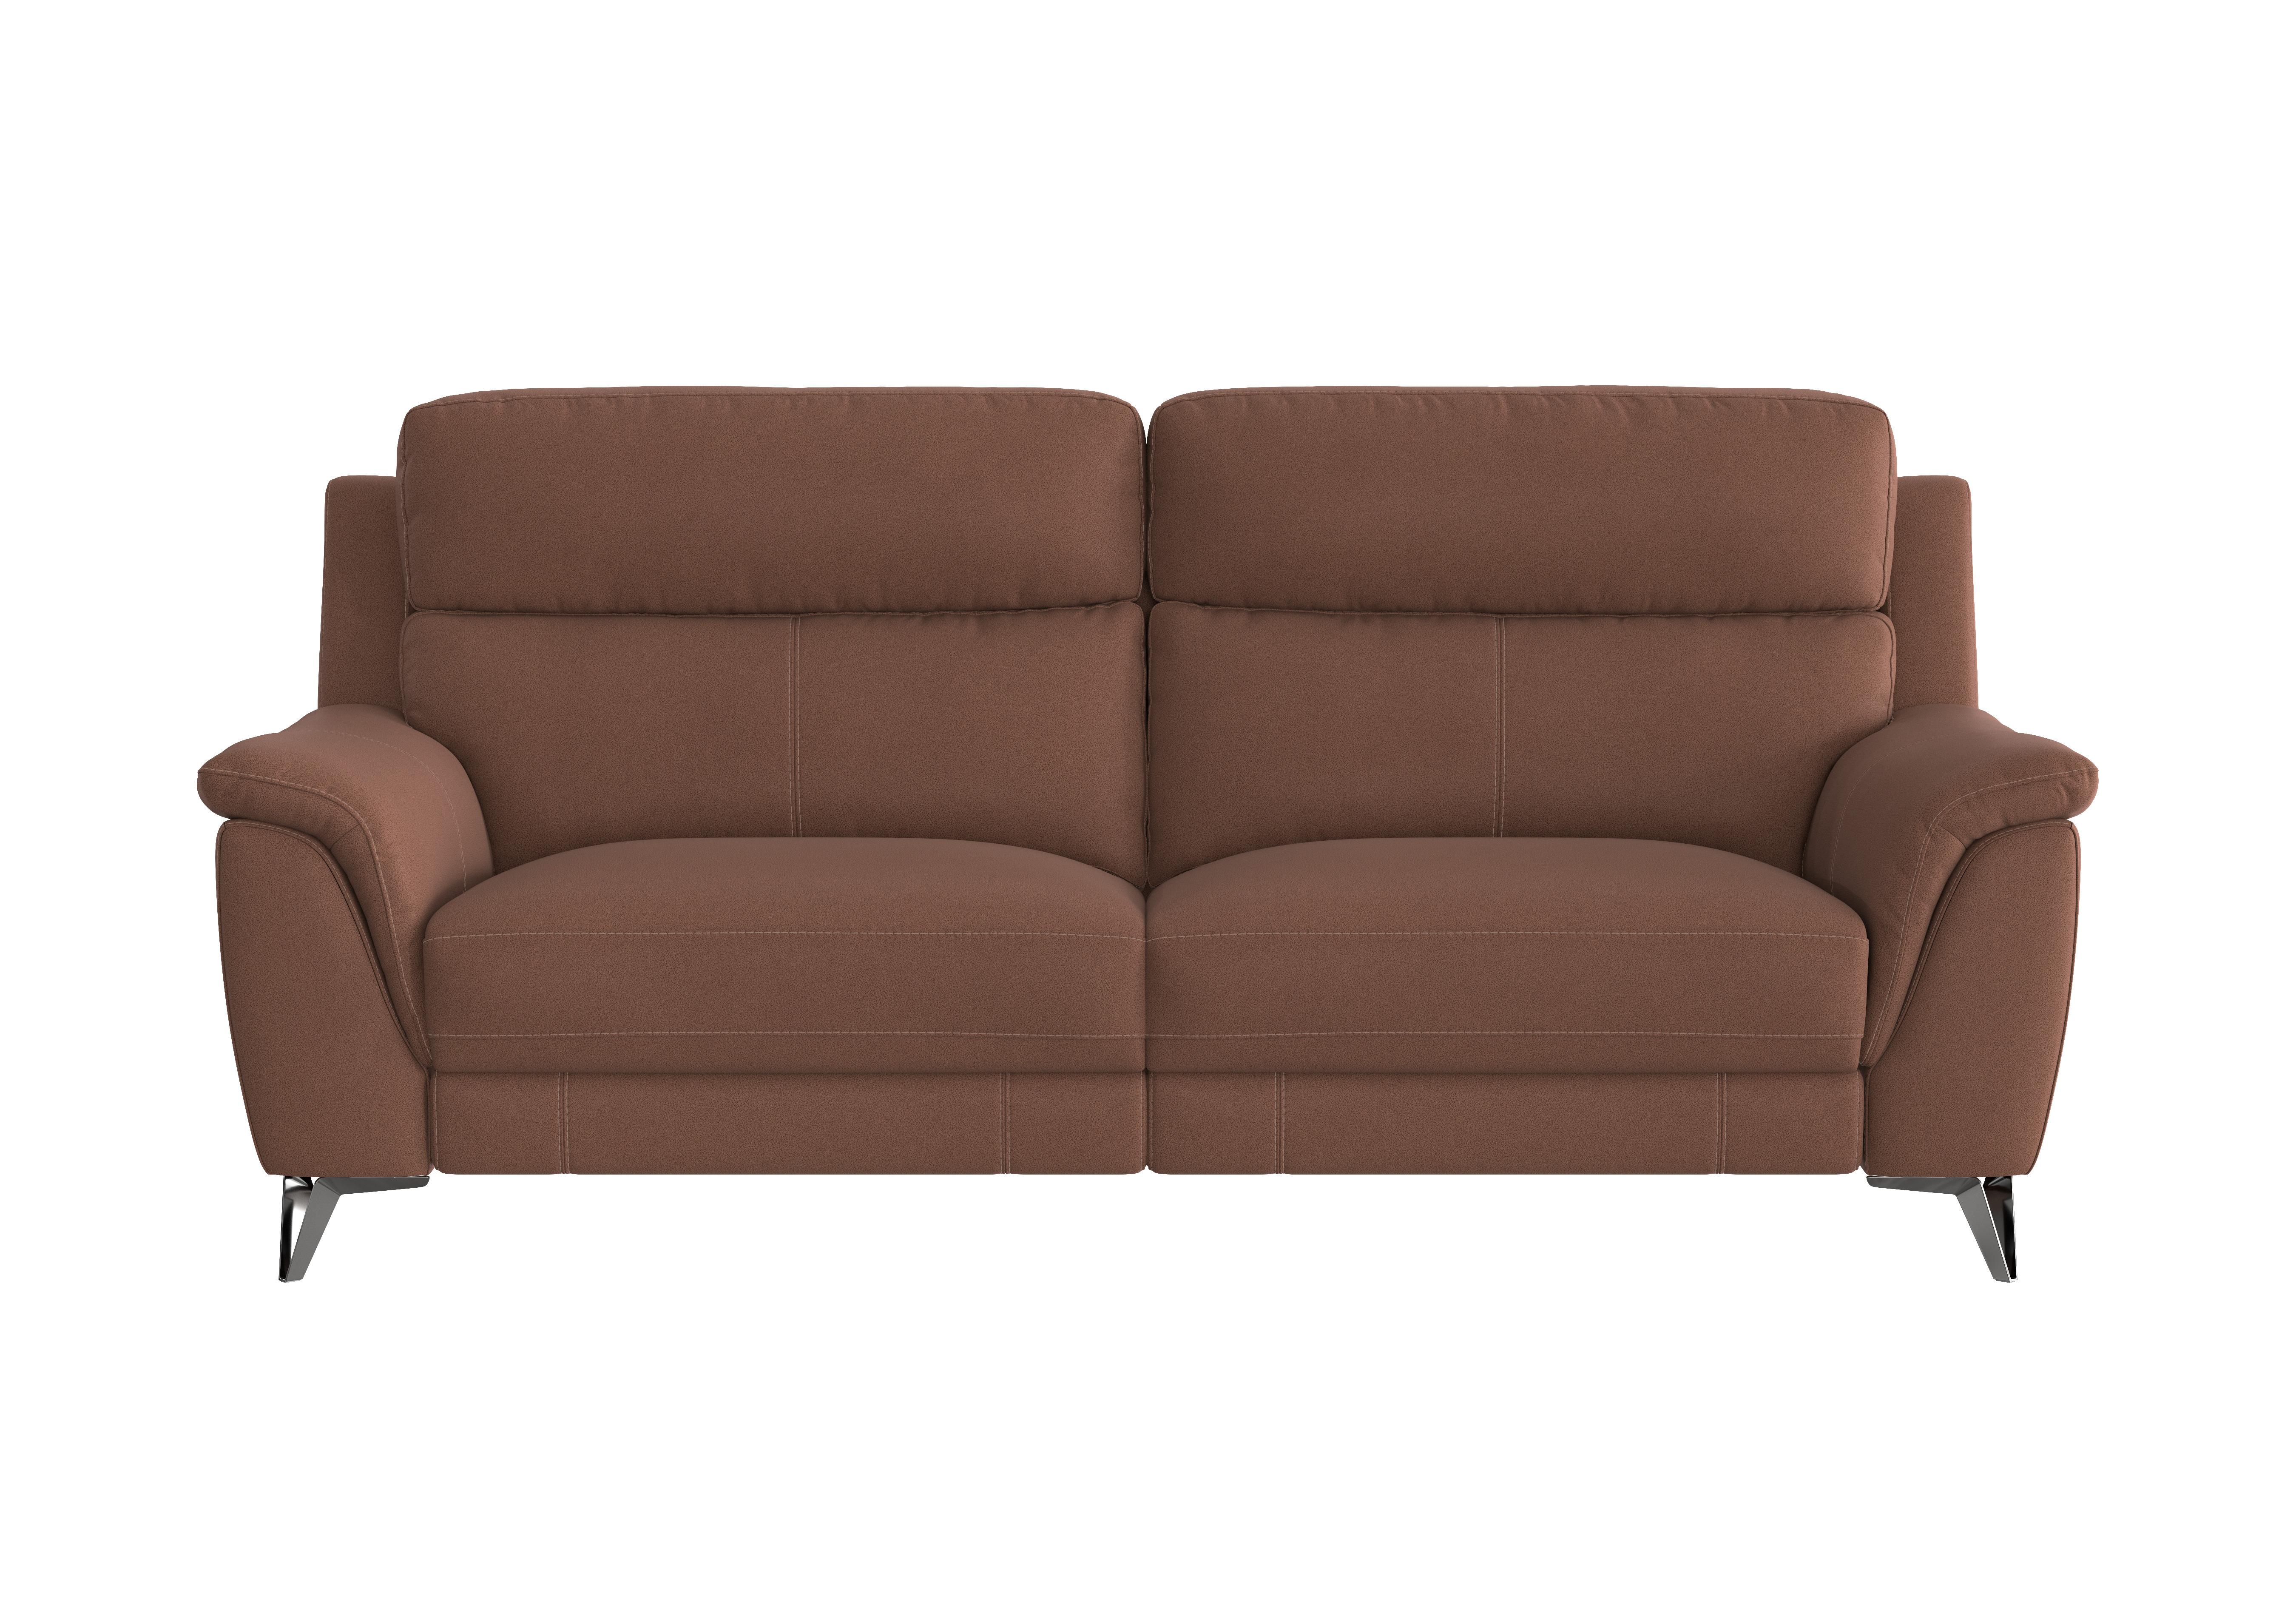 Contempo 3 Seater Fabric Sofa in Bfa-Blj-R05 Hazelnut on Furniture Village